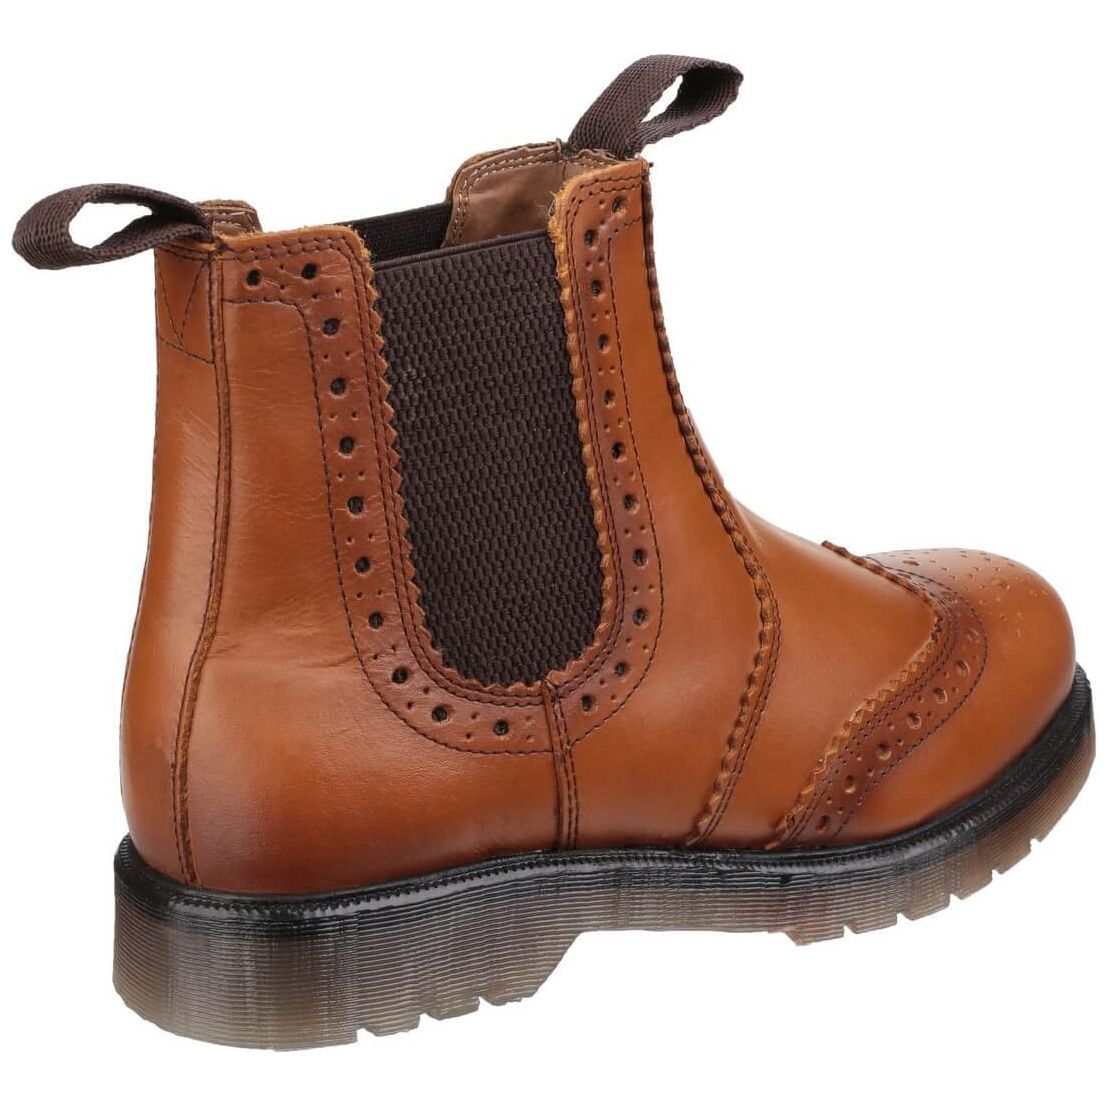 Amblers Dalby Brogue Boots Mens - workweargurus.com